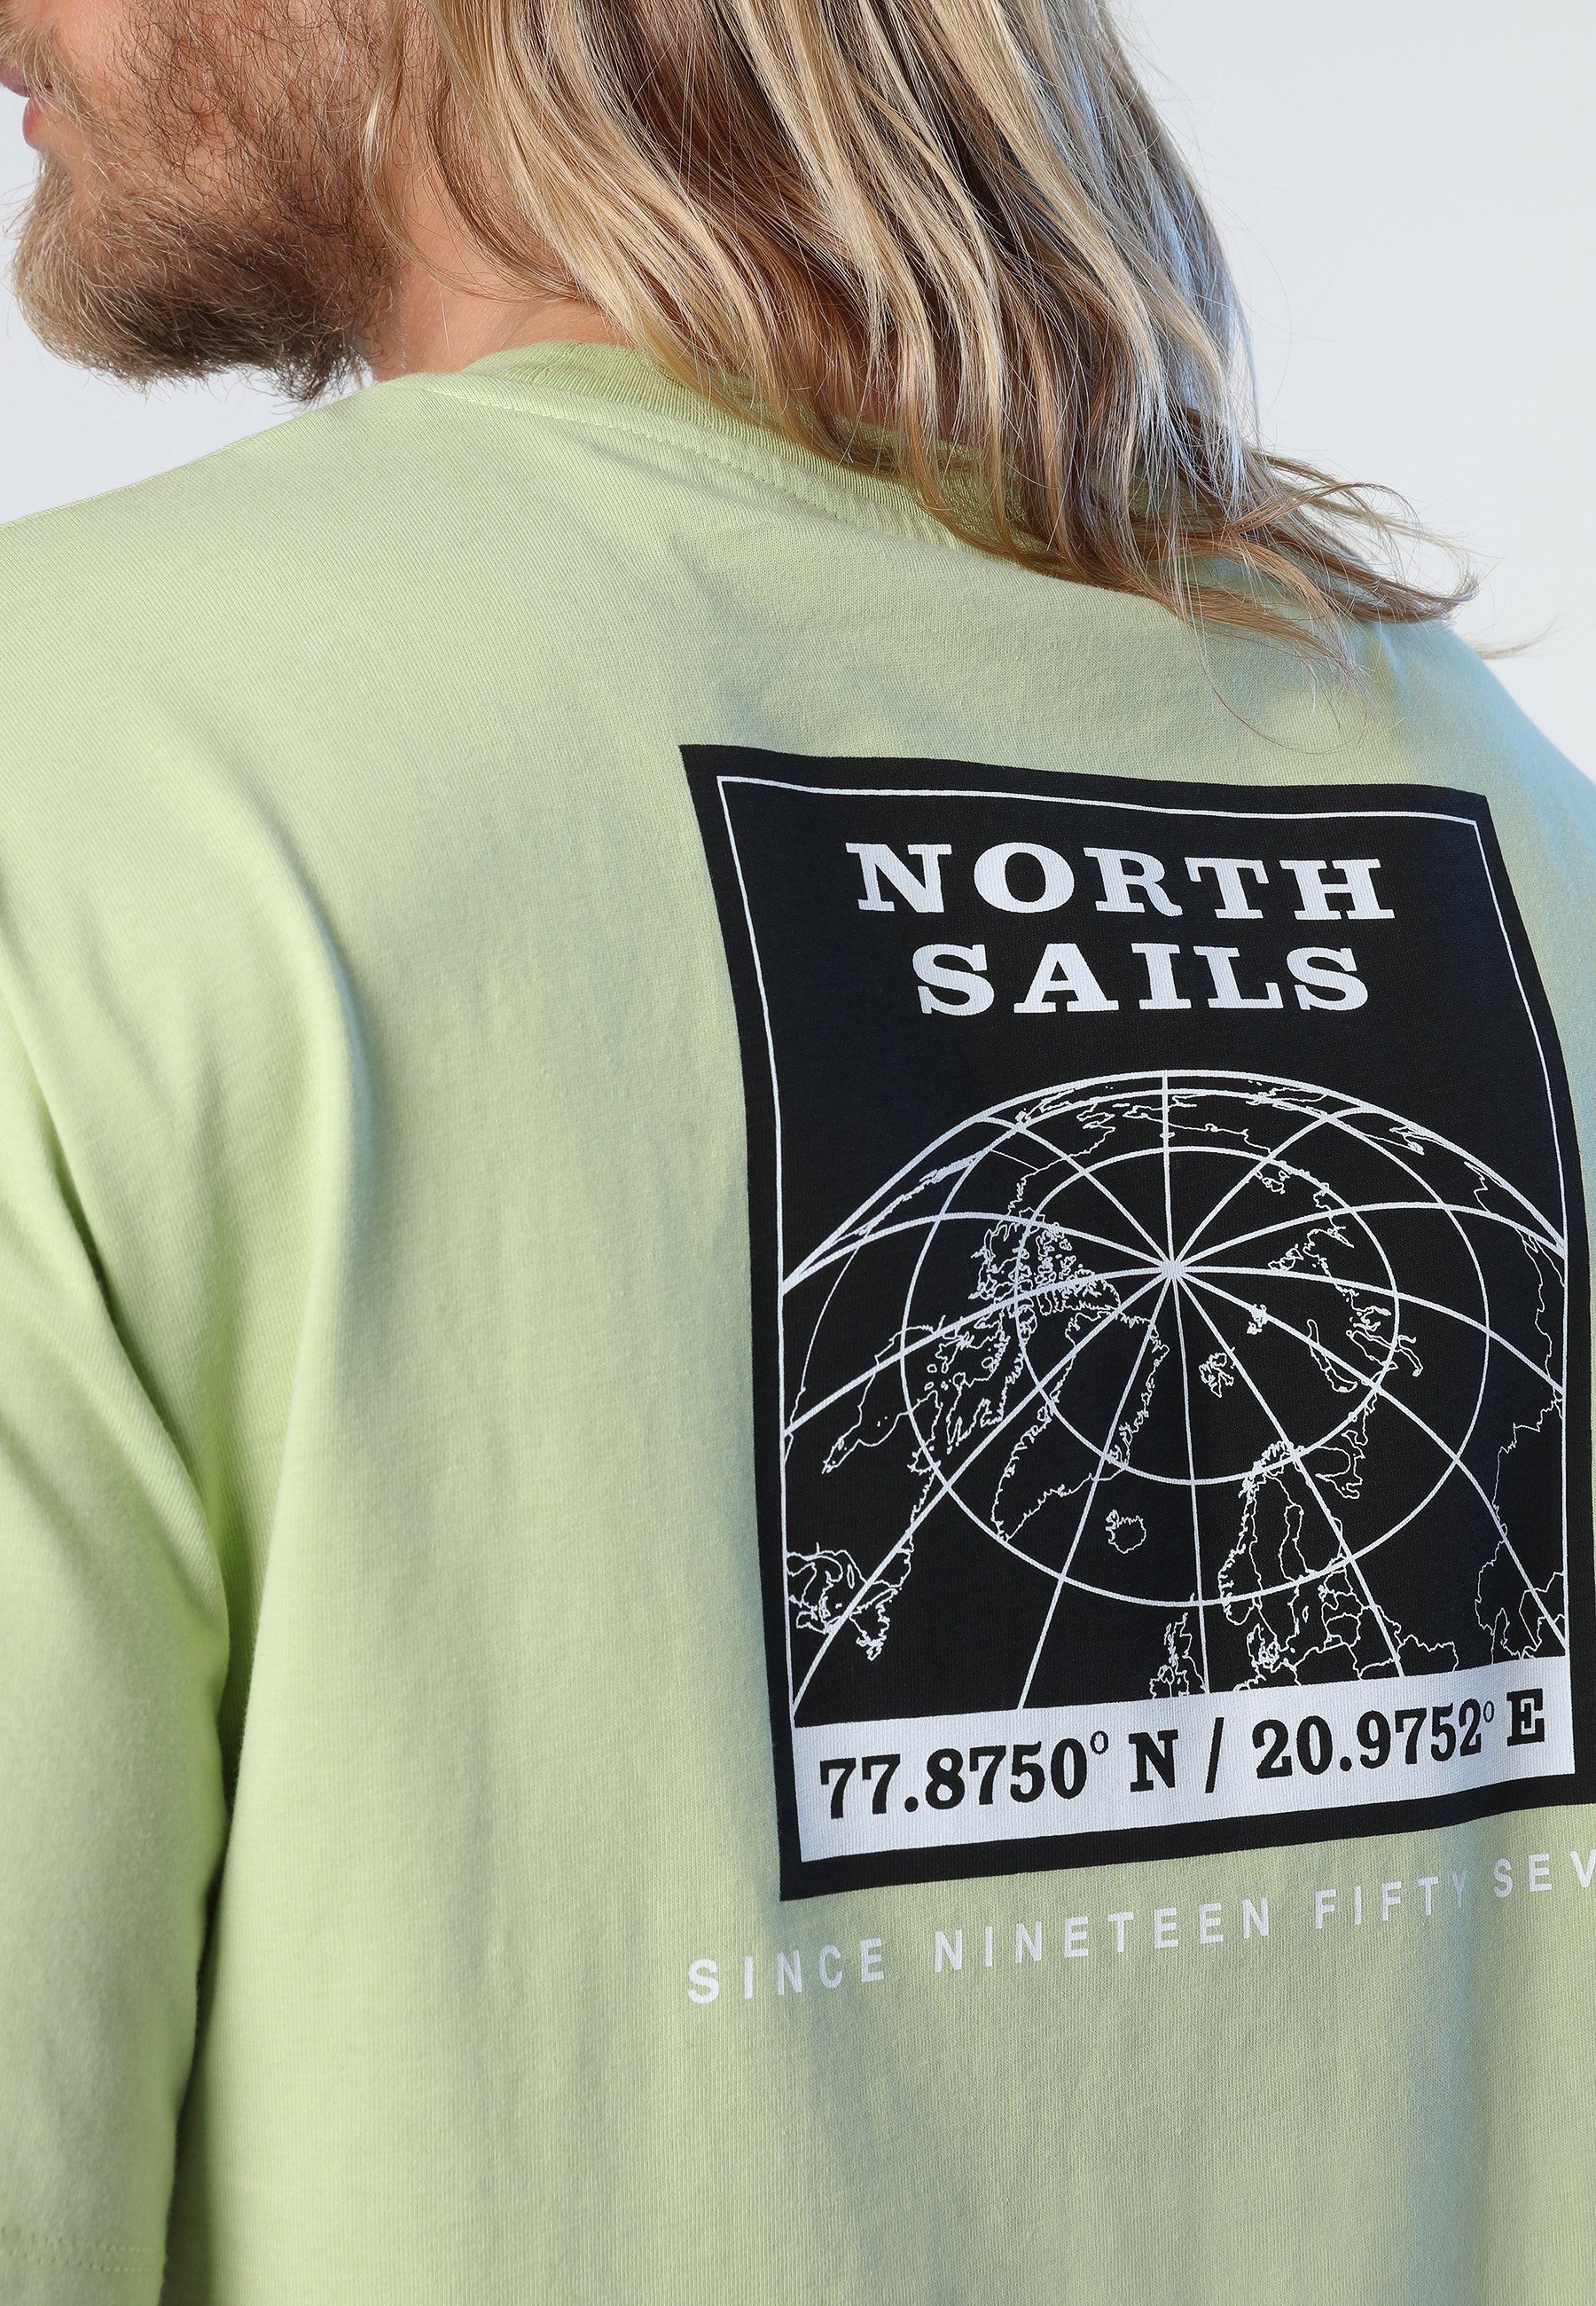 print Sails T-Shirt with T-shirt T-Shirt ASPHALT North graphic